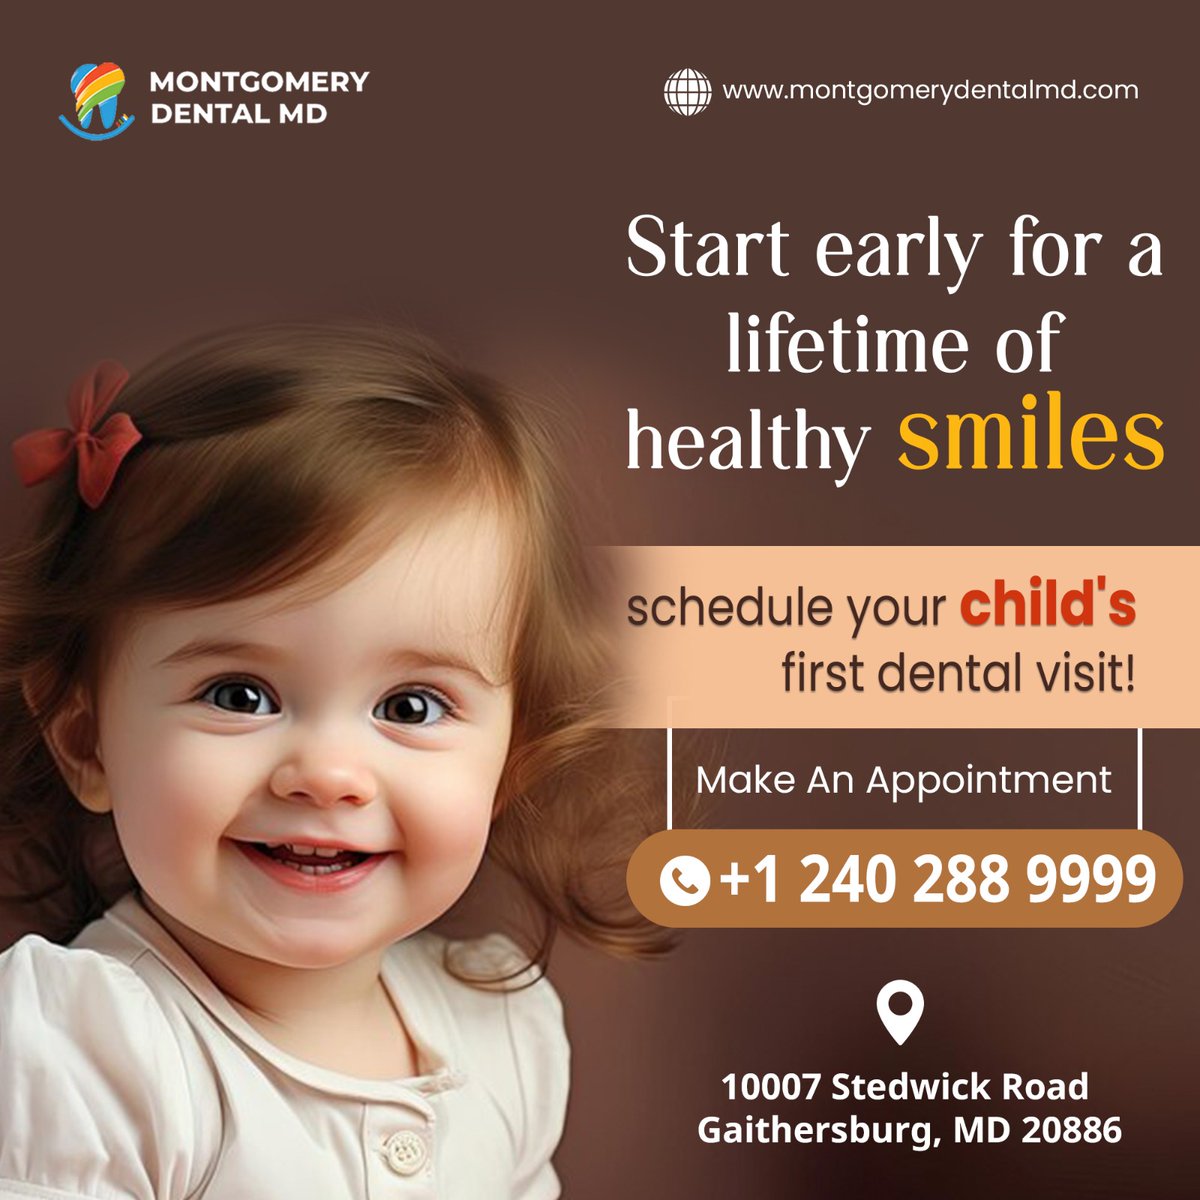 Let Us Keep Your Kids' Smiles Bright and Healthy!
.
.
Book an appointment: 240-288-9999 or  
Visit: montgomerydentalmd.com
.
.
#KidsdentalCare #HealthySmilesForKids #PediatricDentist #ChildDentistry #DentalHealthForKids #Happyteeth #CaringForKidsTeeth #SmileBright